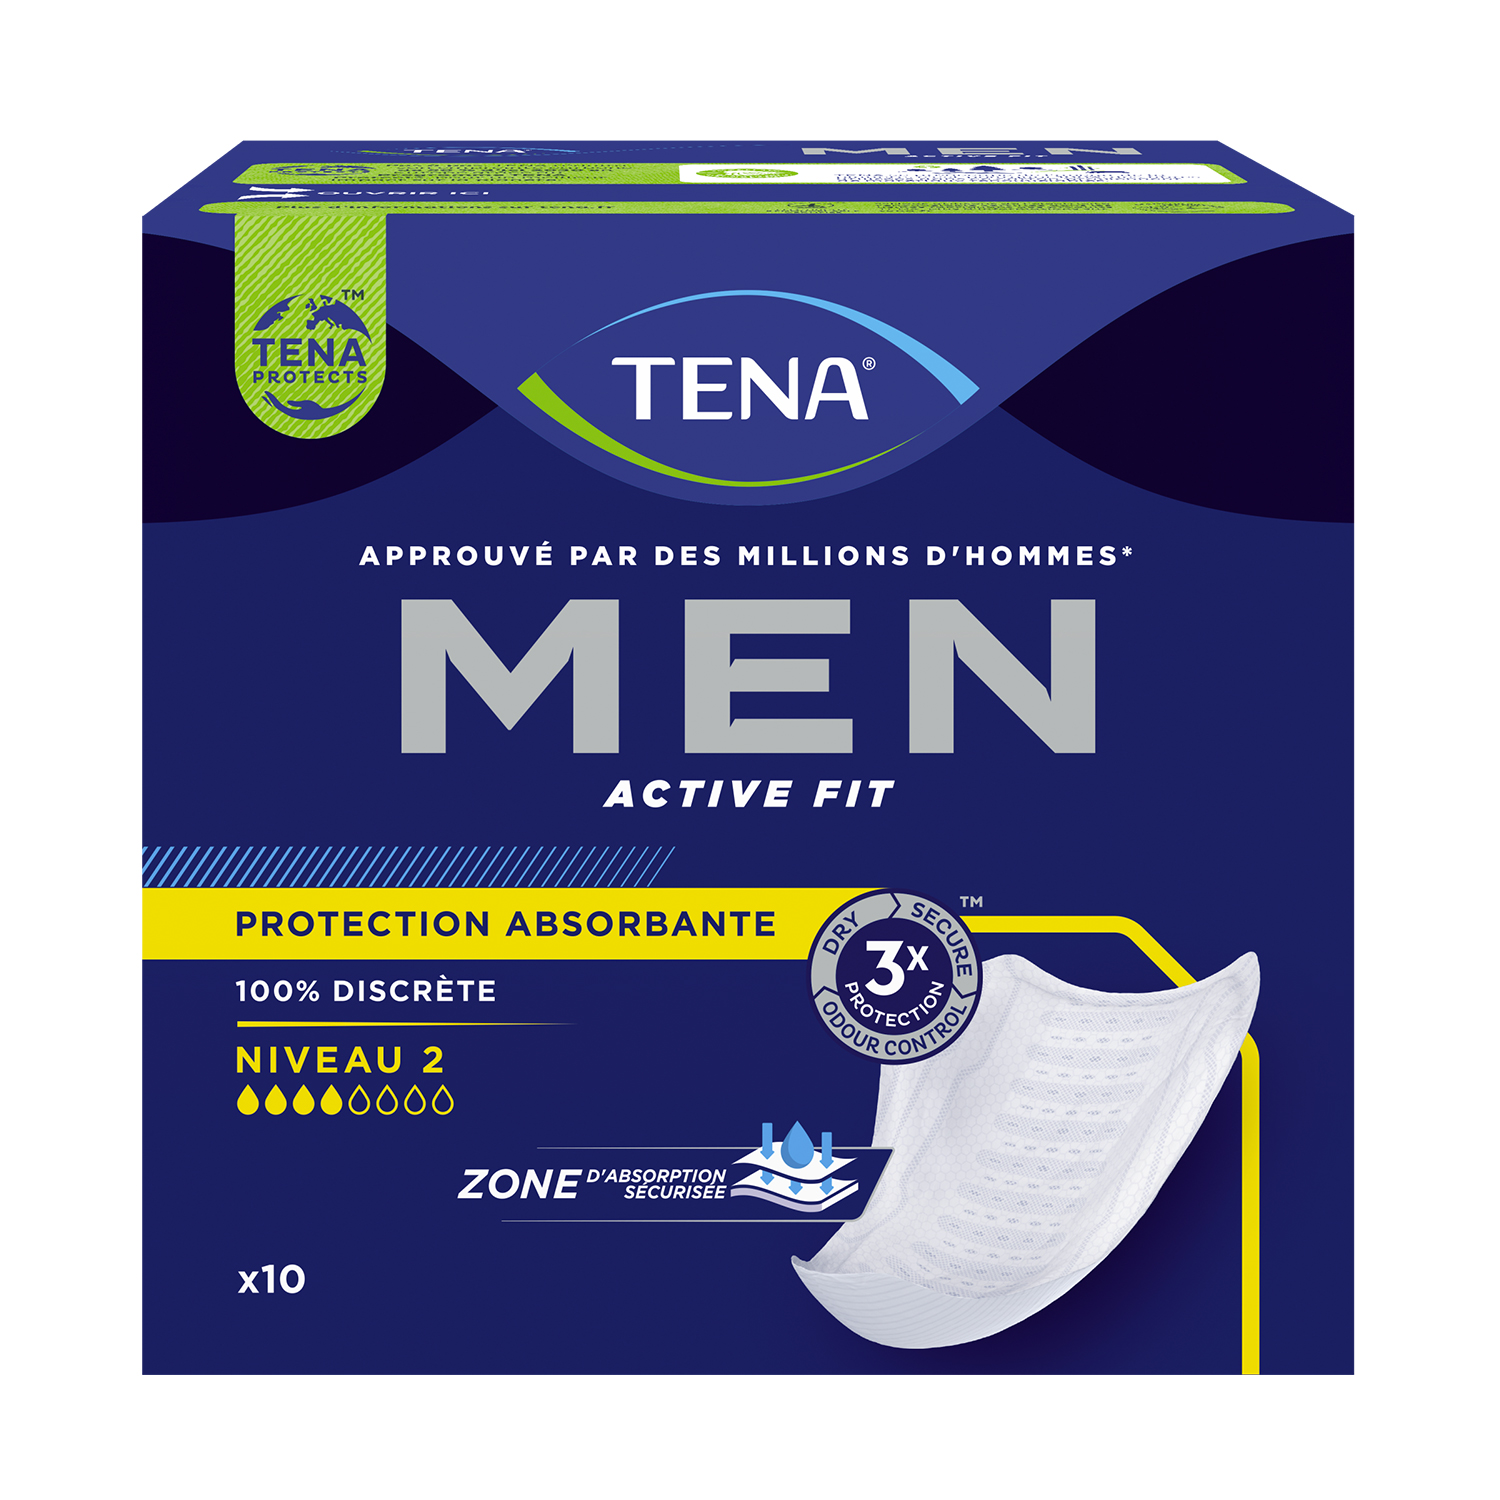 Tena Men – Protections Absorbantes